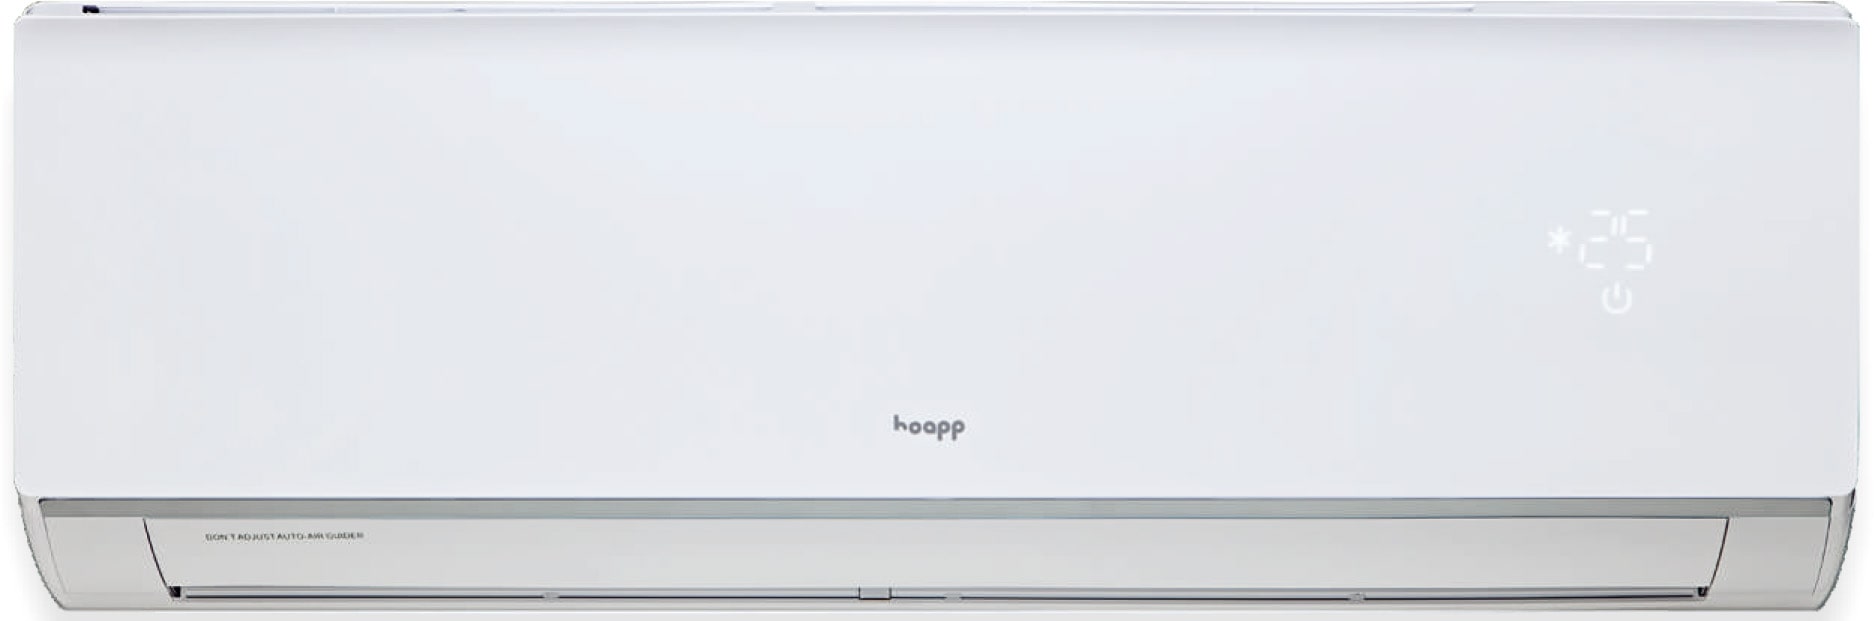 Hoapp Light Inverter внутренний блок